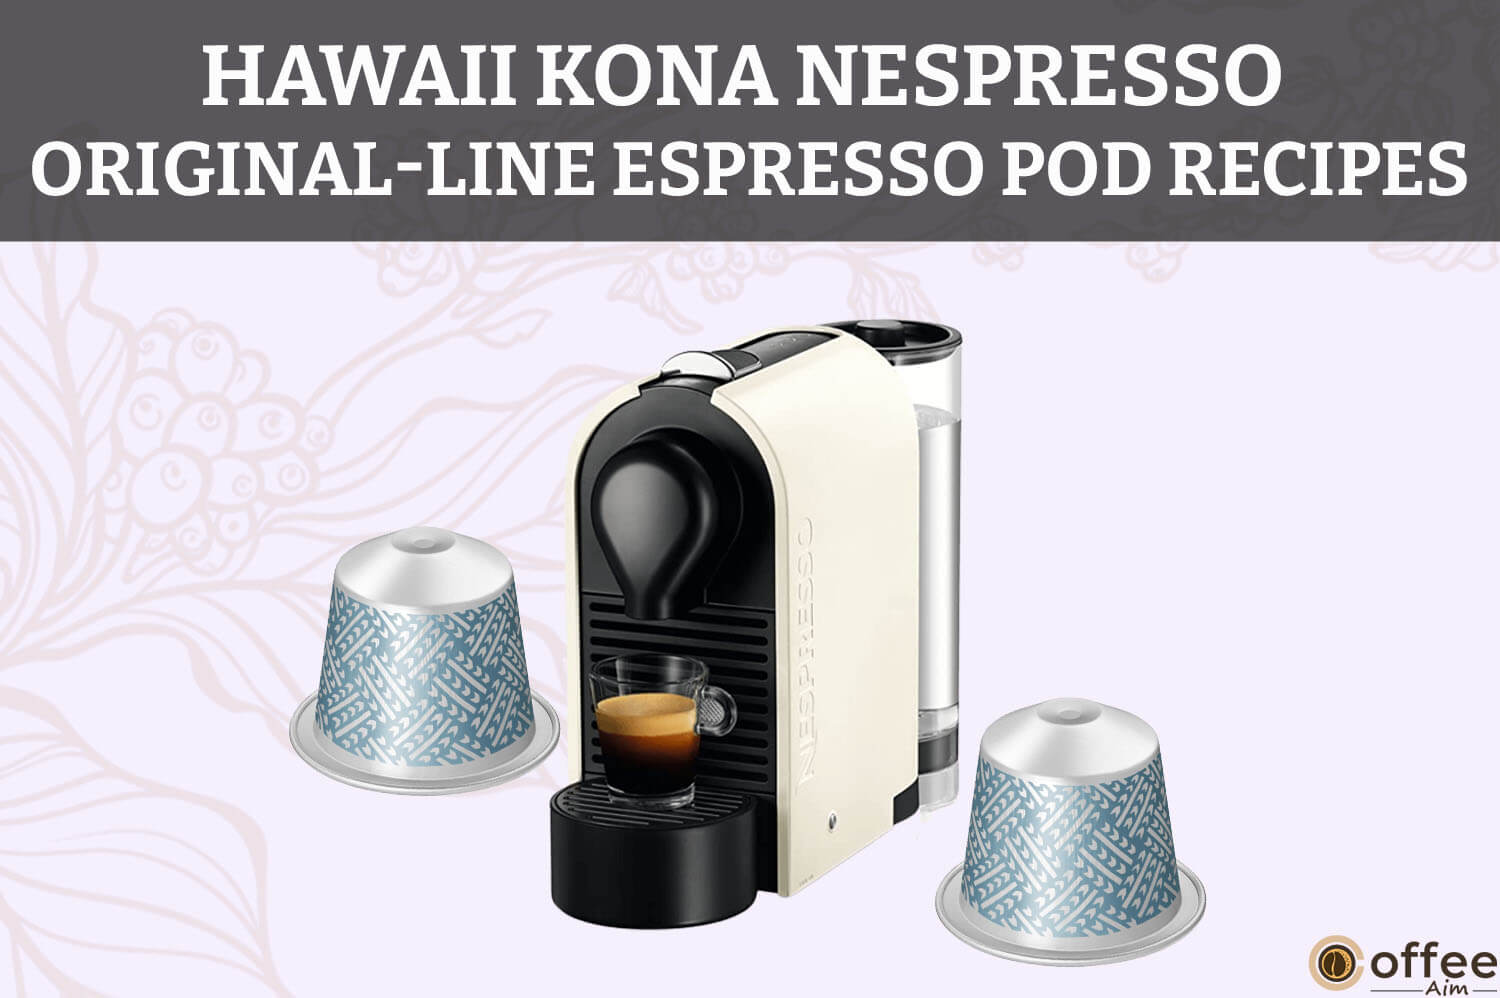 Featured image for the article "Hawaii Kona Nespresso OriginalLine Espresso Pod Recipes"